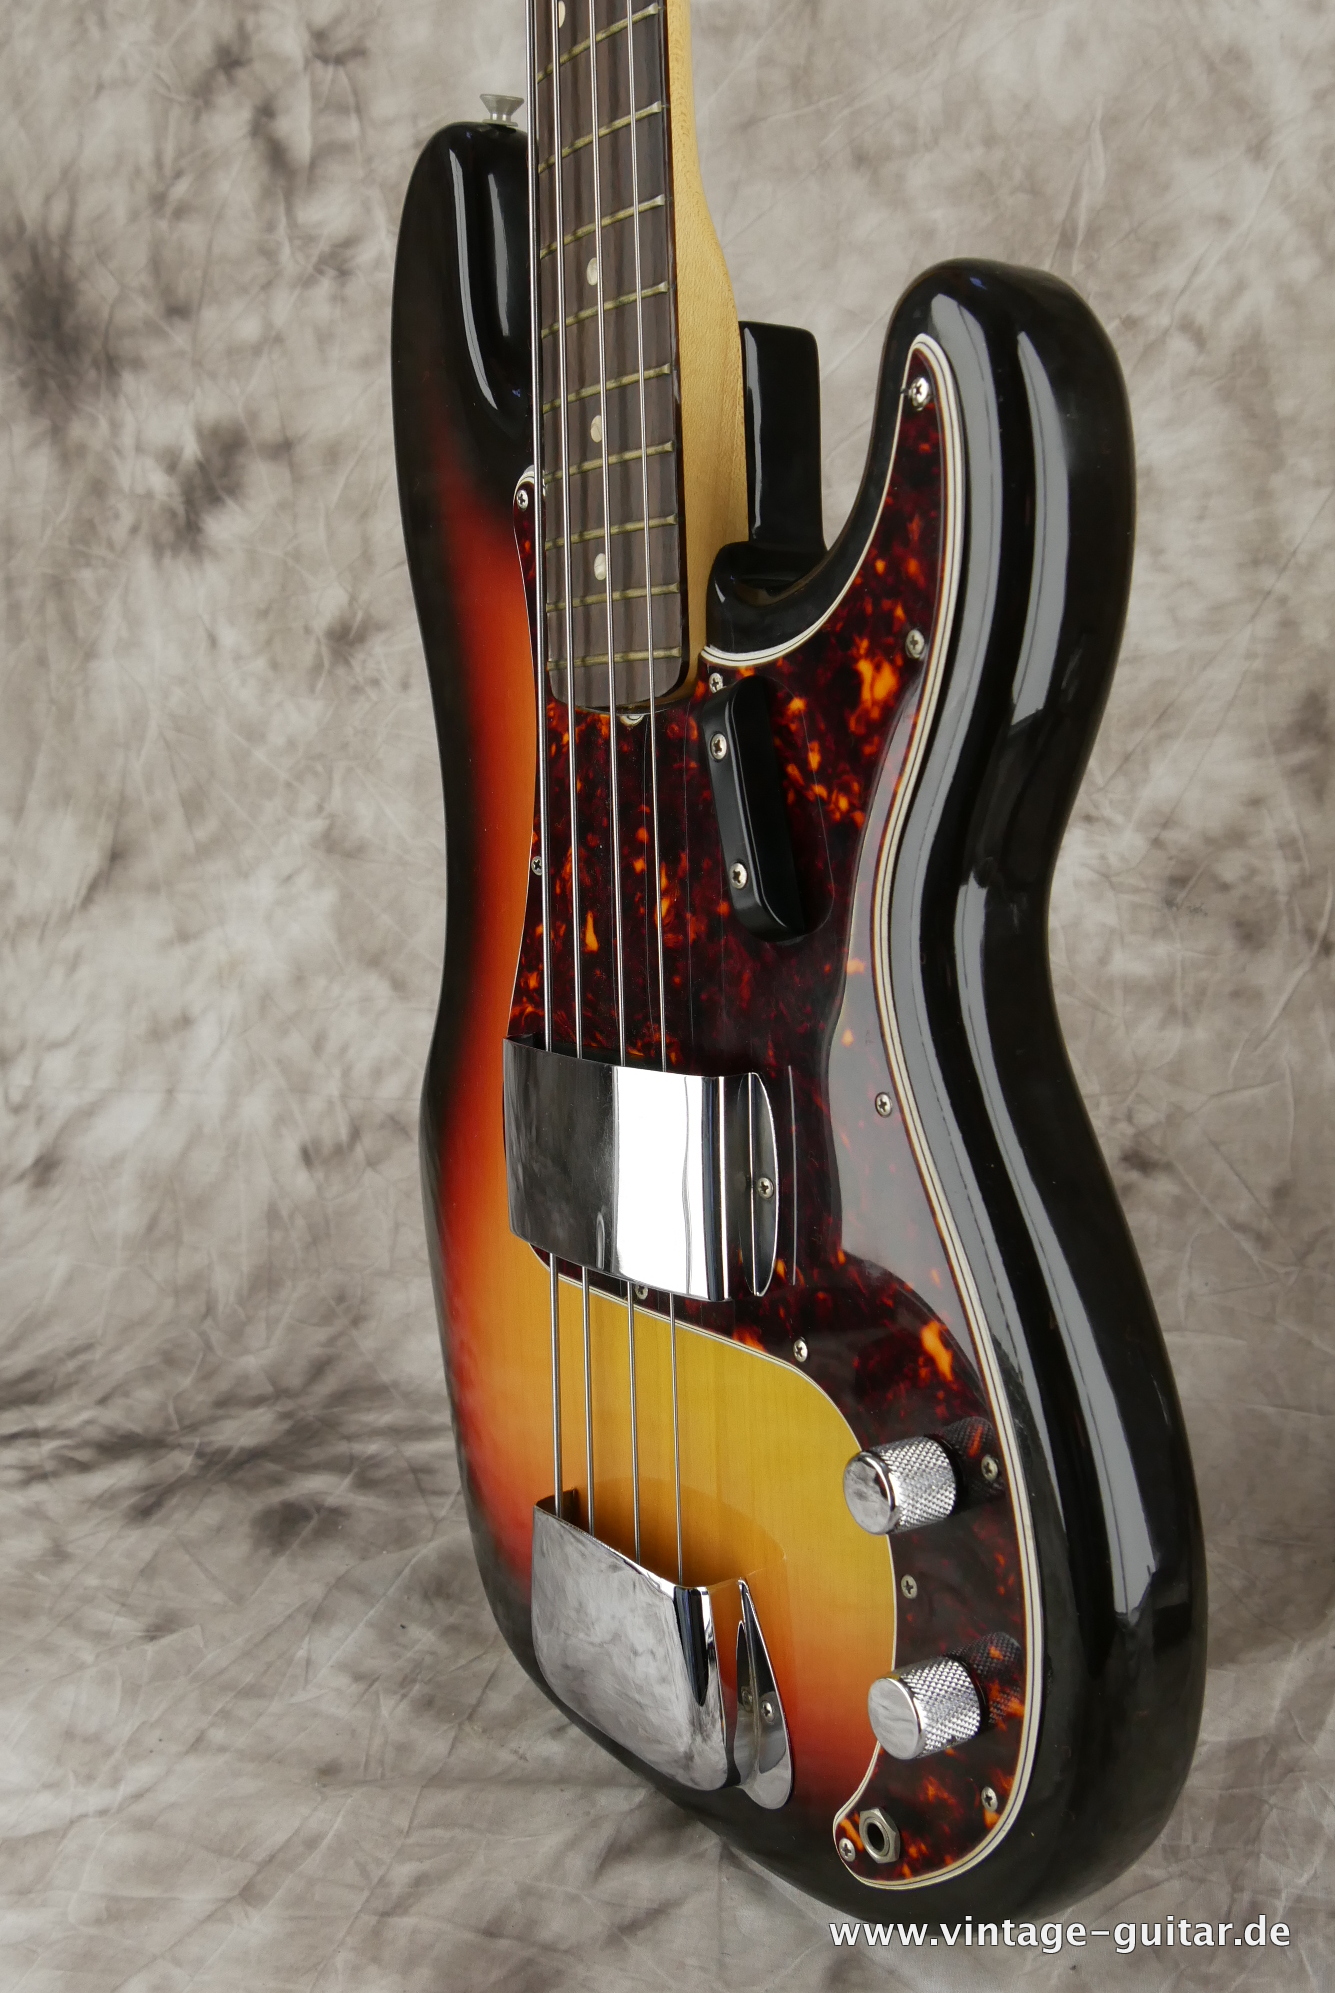 Fender-Precision-Bass-1965-sunburst-mint-condition-006.JPG